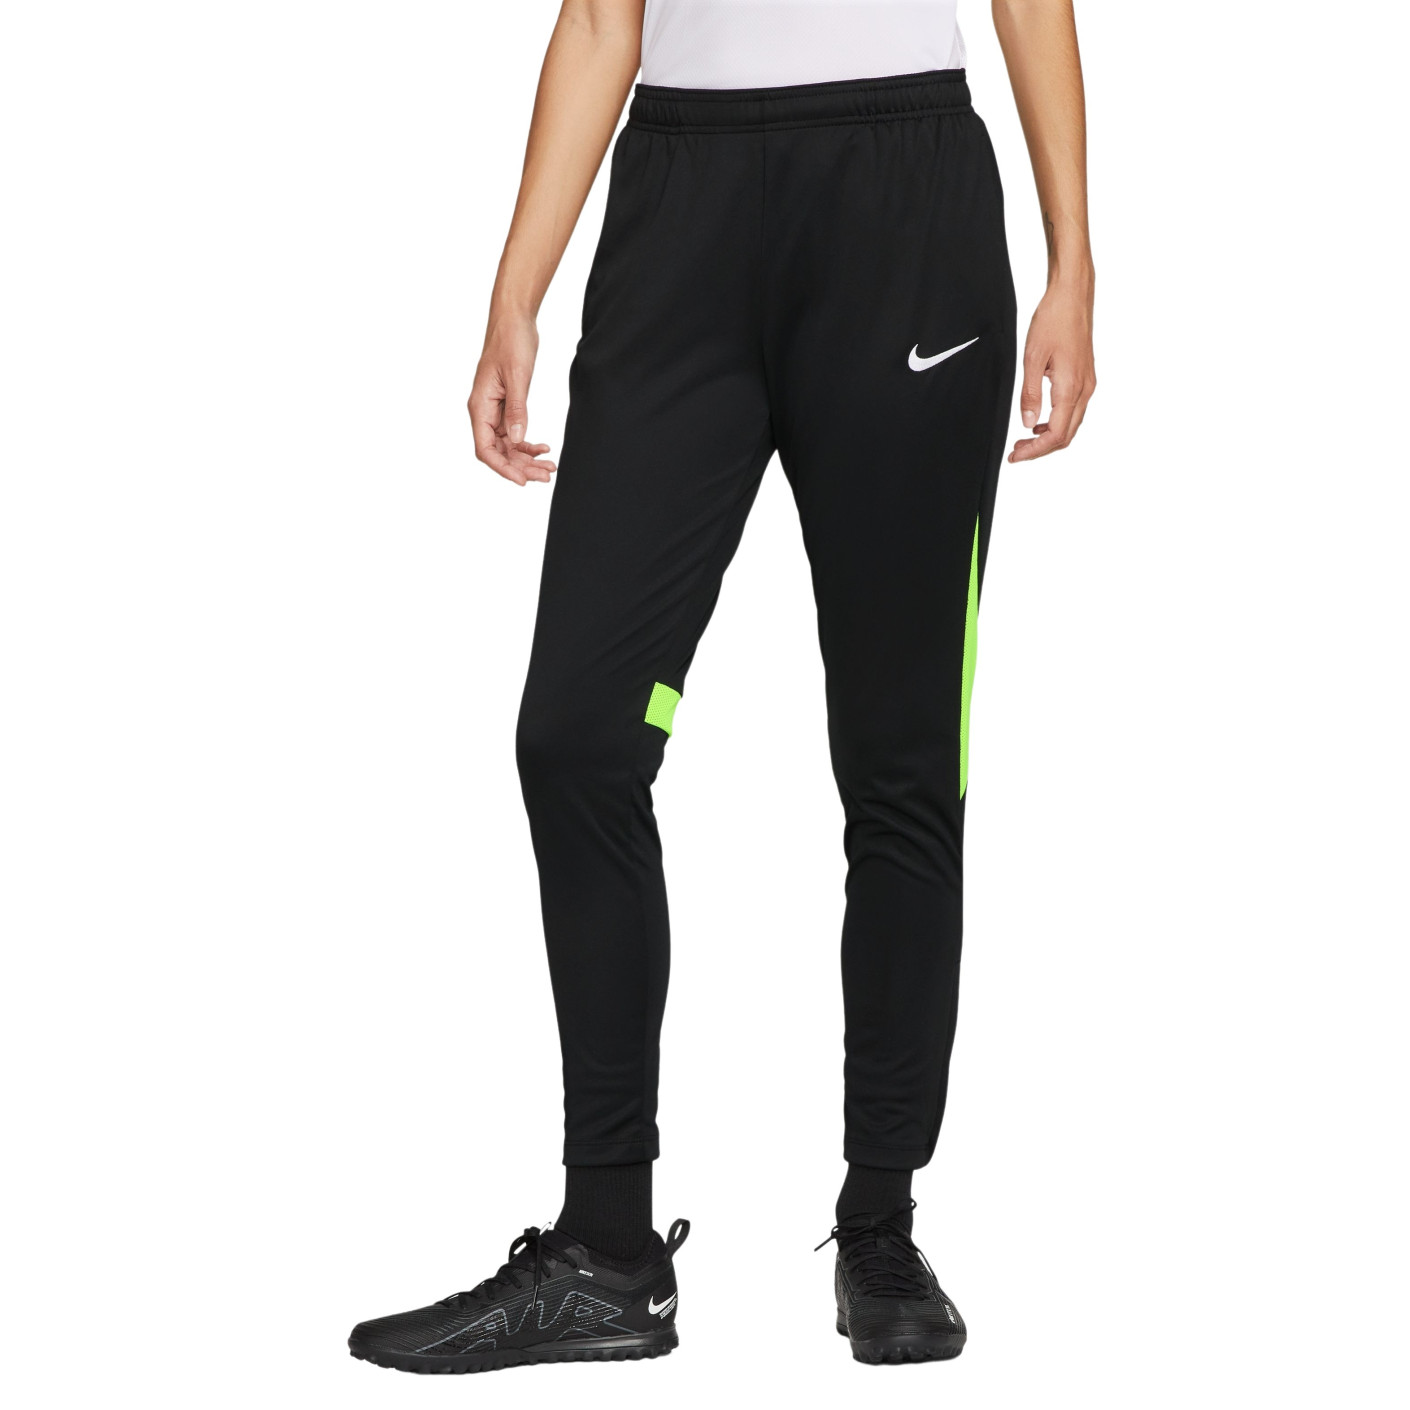 Nike Academy Pro Women's Training Pants Black Neon Yellow